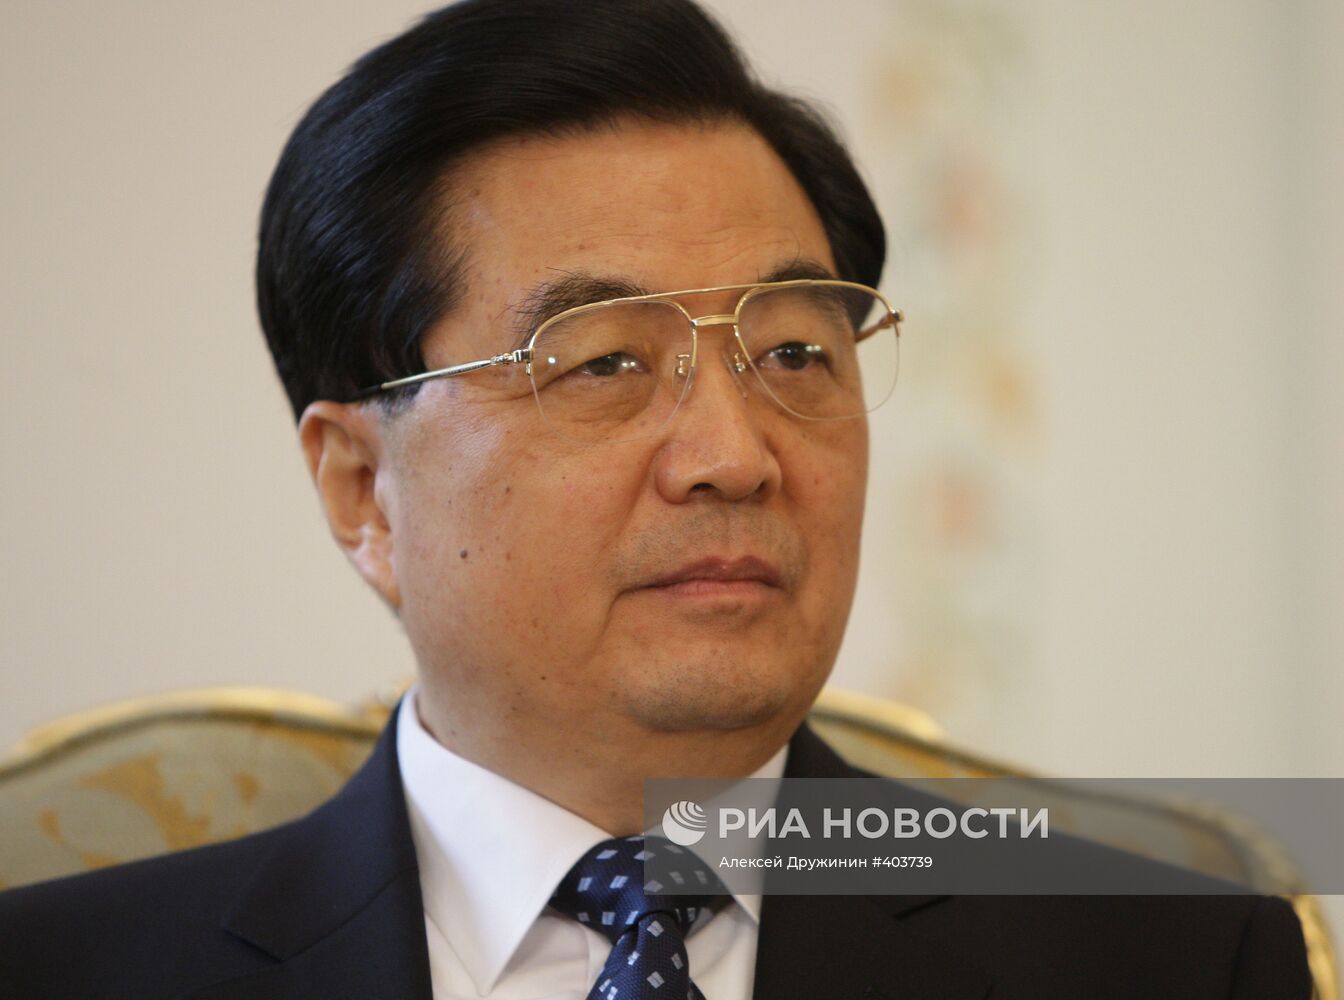 Председателя КНР Ху Цзиньтао в Ново-Огарево